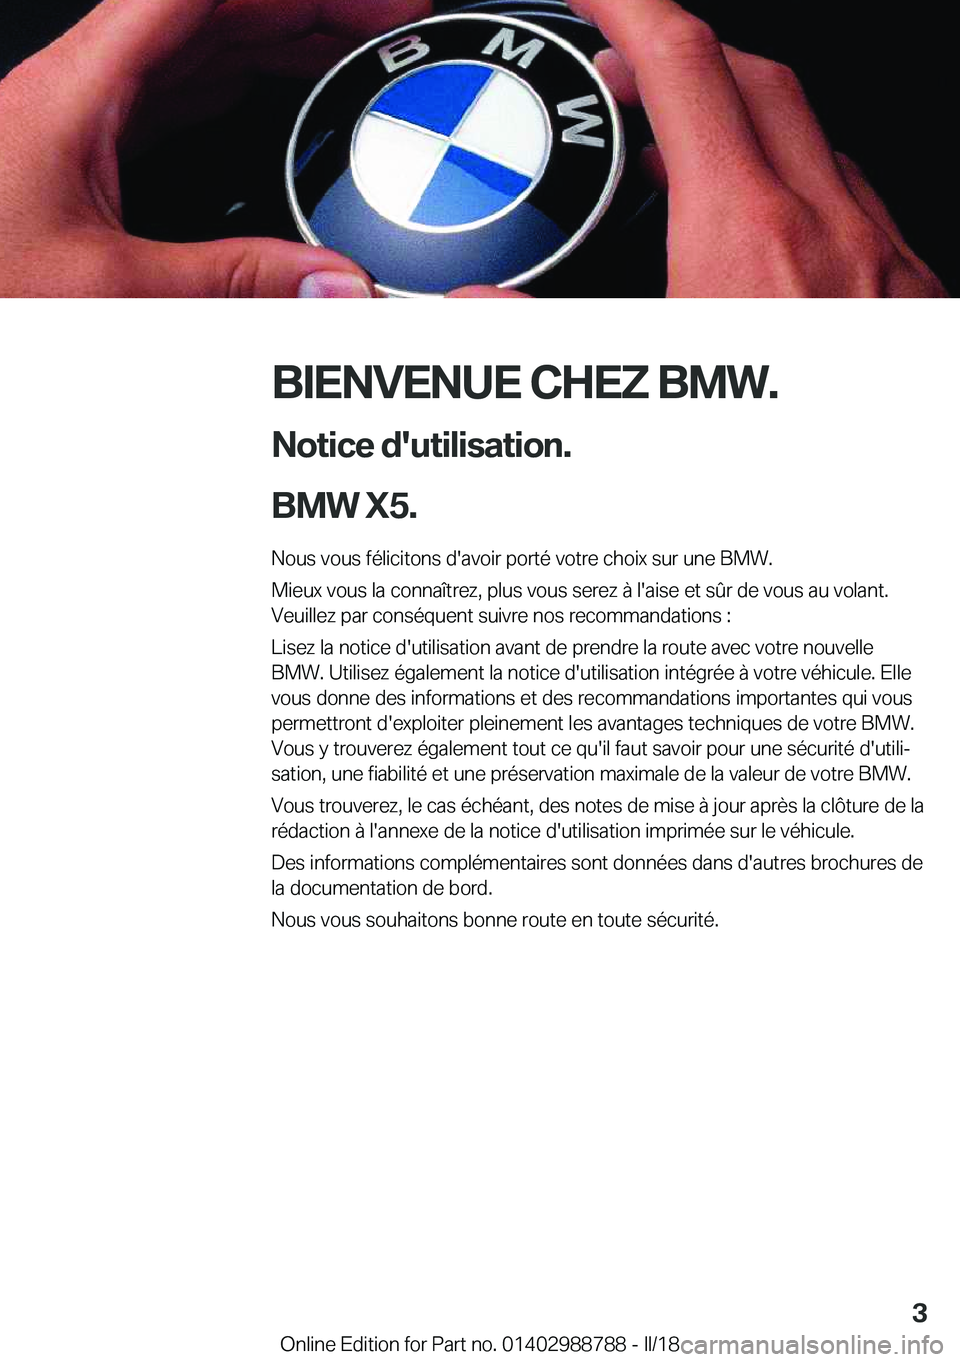 BMW X5 2018  Notices Demploi (in French) �B�I�E�N�V�E�N�U�E��C�H�E�Z��B�M�W�.�N�o�t�i�c�e��d�'�u�t�i�l�i�s�a�t�i�o�n�.
�B�M�W��X�5�. �N�o�u�s� �v�o�u�s� �f�é�l�i�c�i�t�o�n�s� �d�'�a�v�o�i�r� �p�o�r�t�é� �v�o�t�r�e� �c�h�o�i�x� 